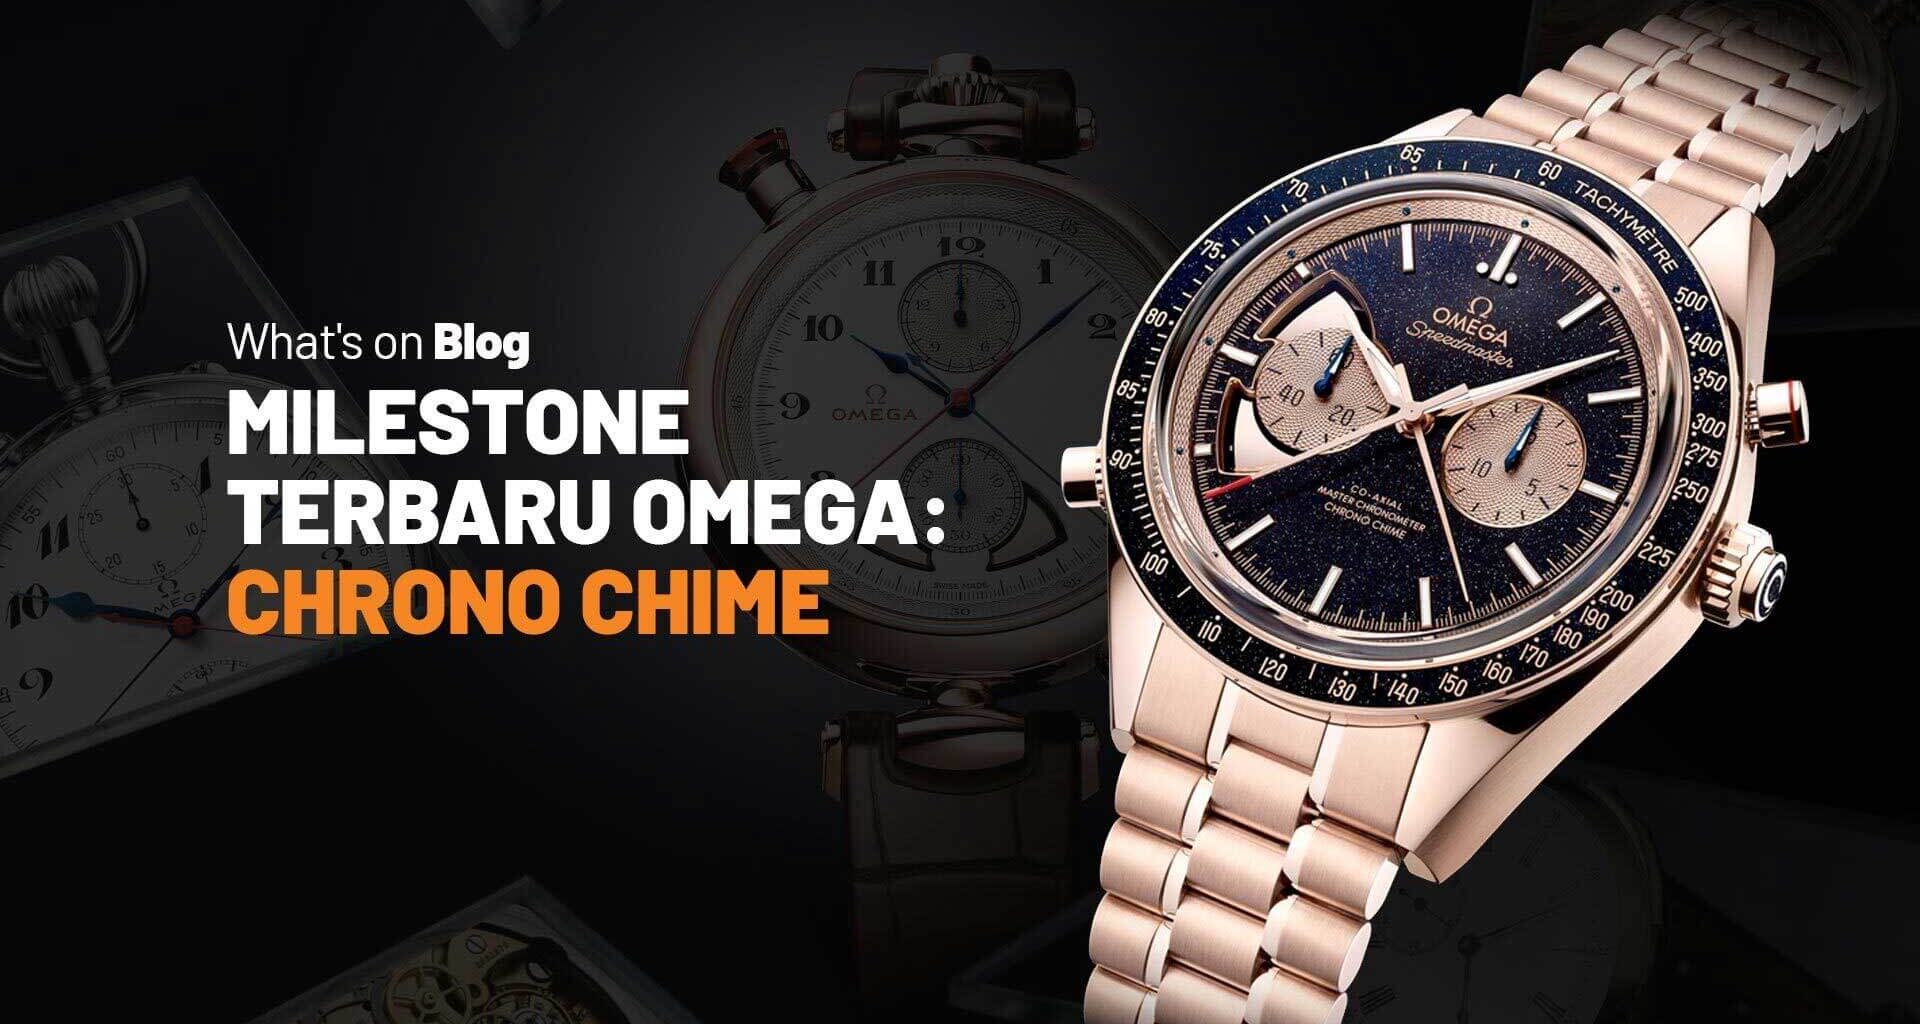 Omega Speedmaster Chrono Chime Watch